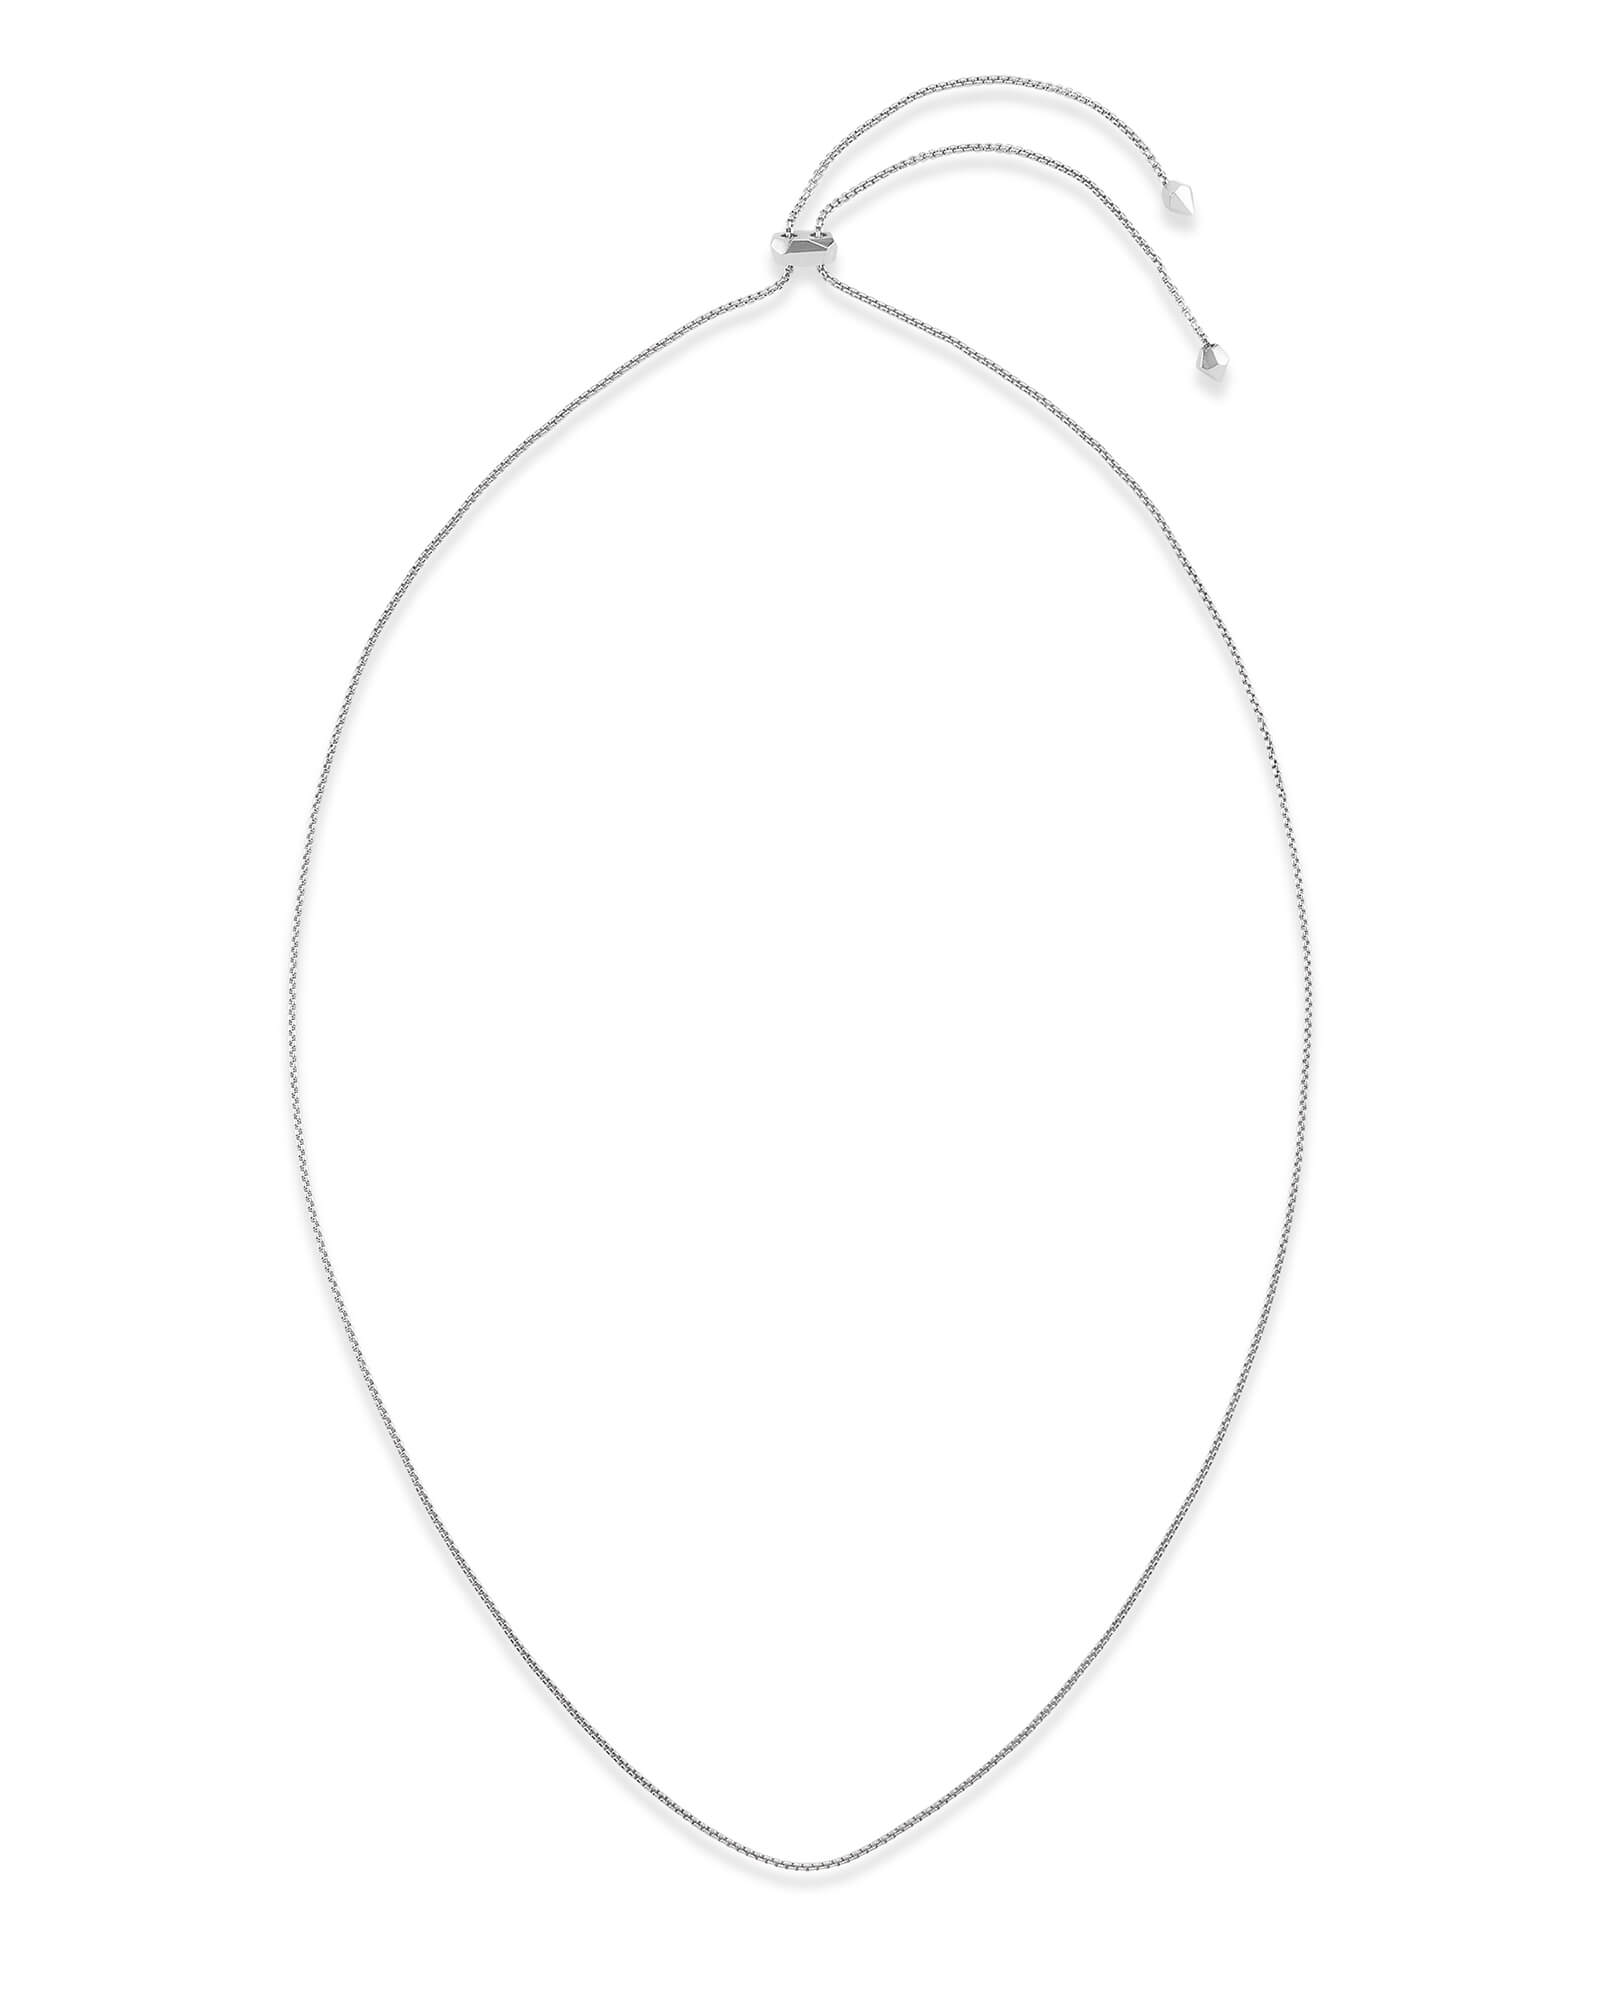 kendra-scott-thin-adjustable-chain-necklace-silver_00_lg.jpg